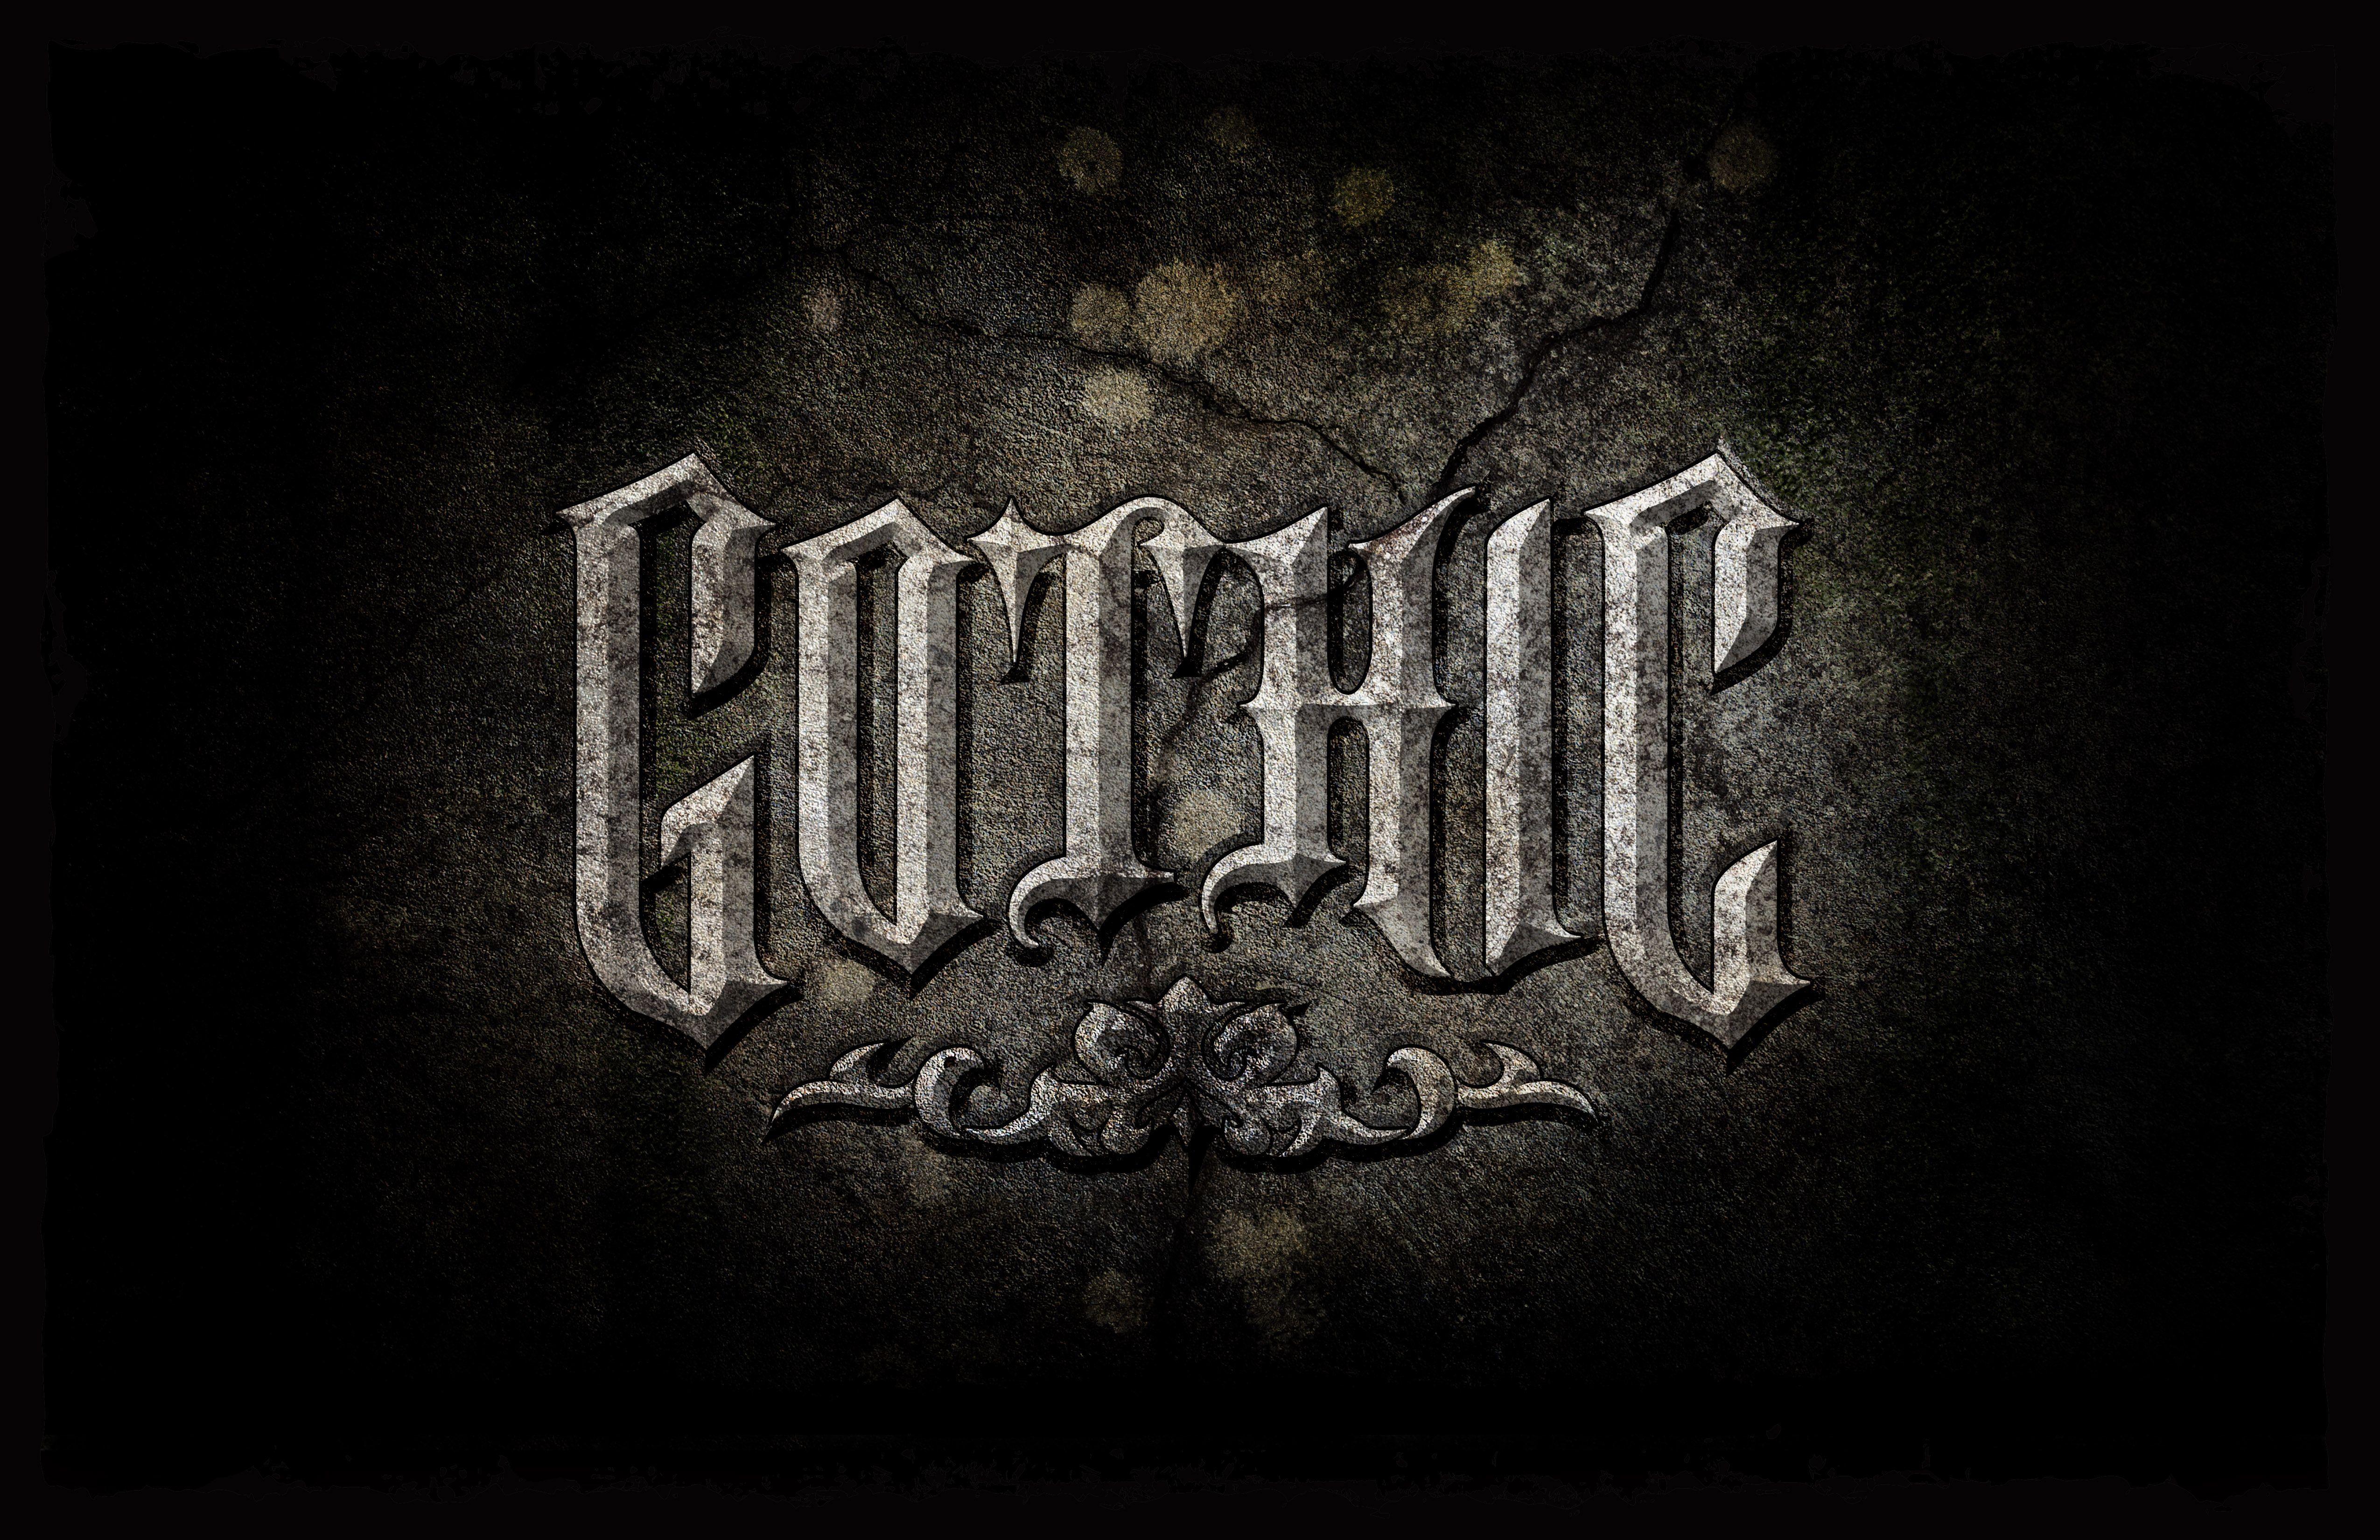 Gothic Logo - The Gothic Logo | Metal Logos | Gothic culture, Gothic, Gothic fashion